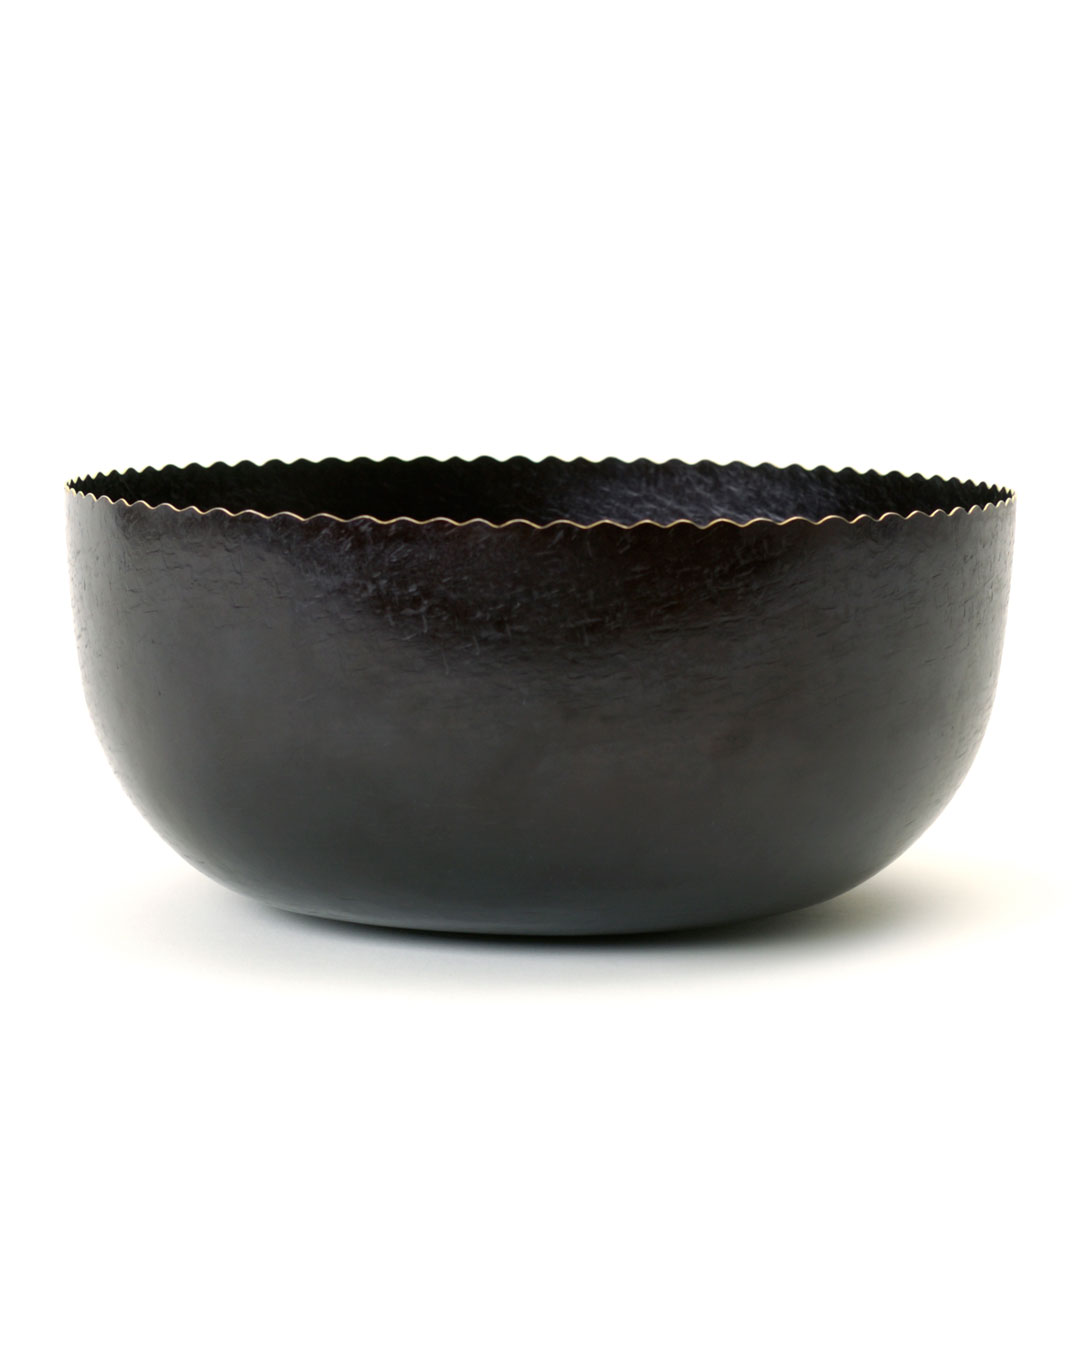 Tore Svensson, untitled, 2001, bowl; steel, 140 x 280 mm, €3500